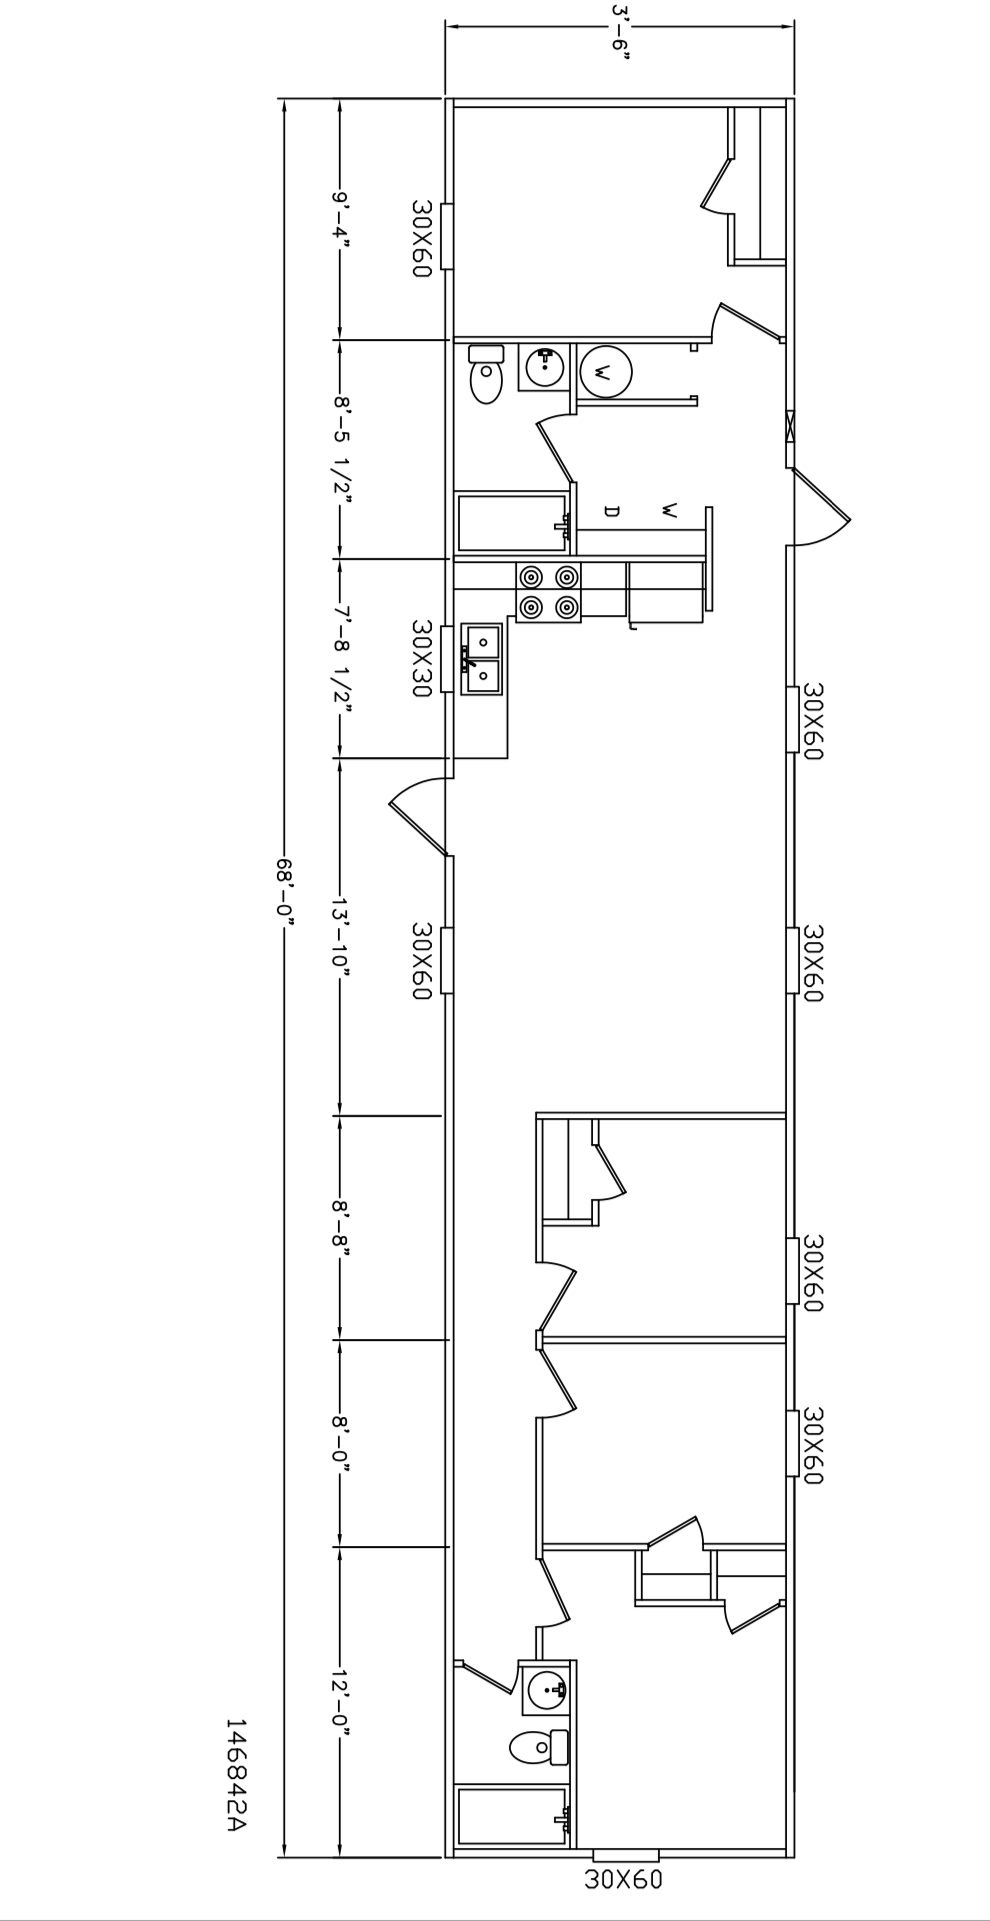 4 Bed2 Bath 14x68 singlewide Units floor plans